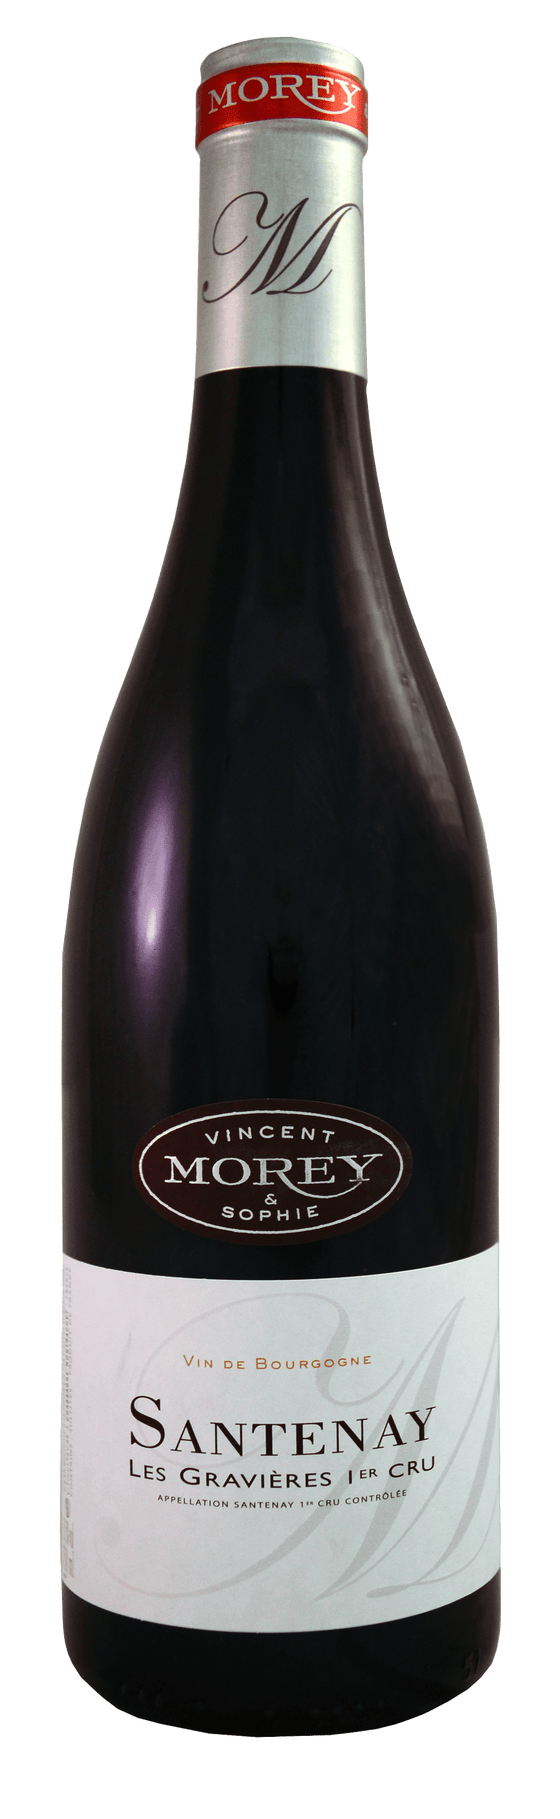 International Wines Wine Morey V&S Santenay Les Gravieres 1er Cru